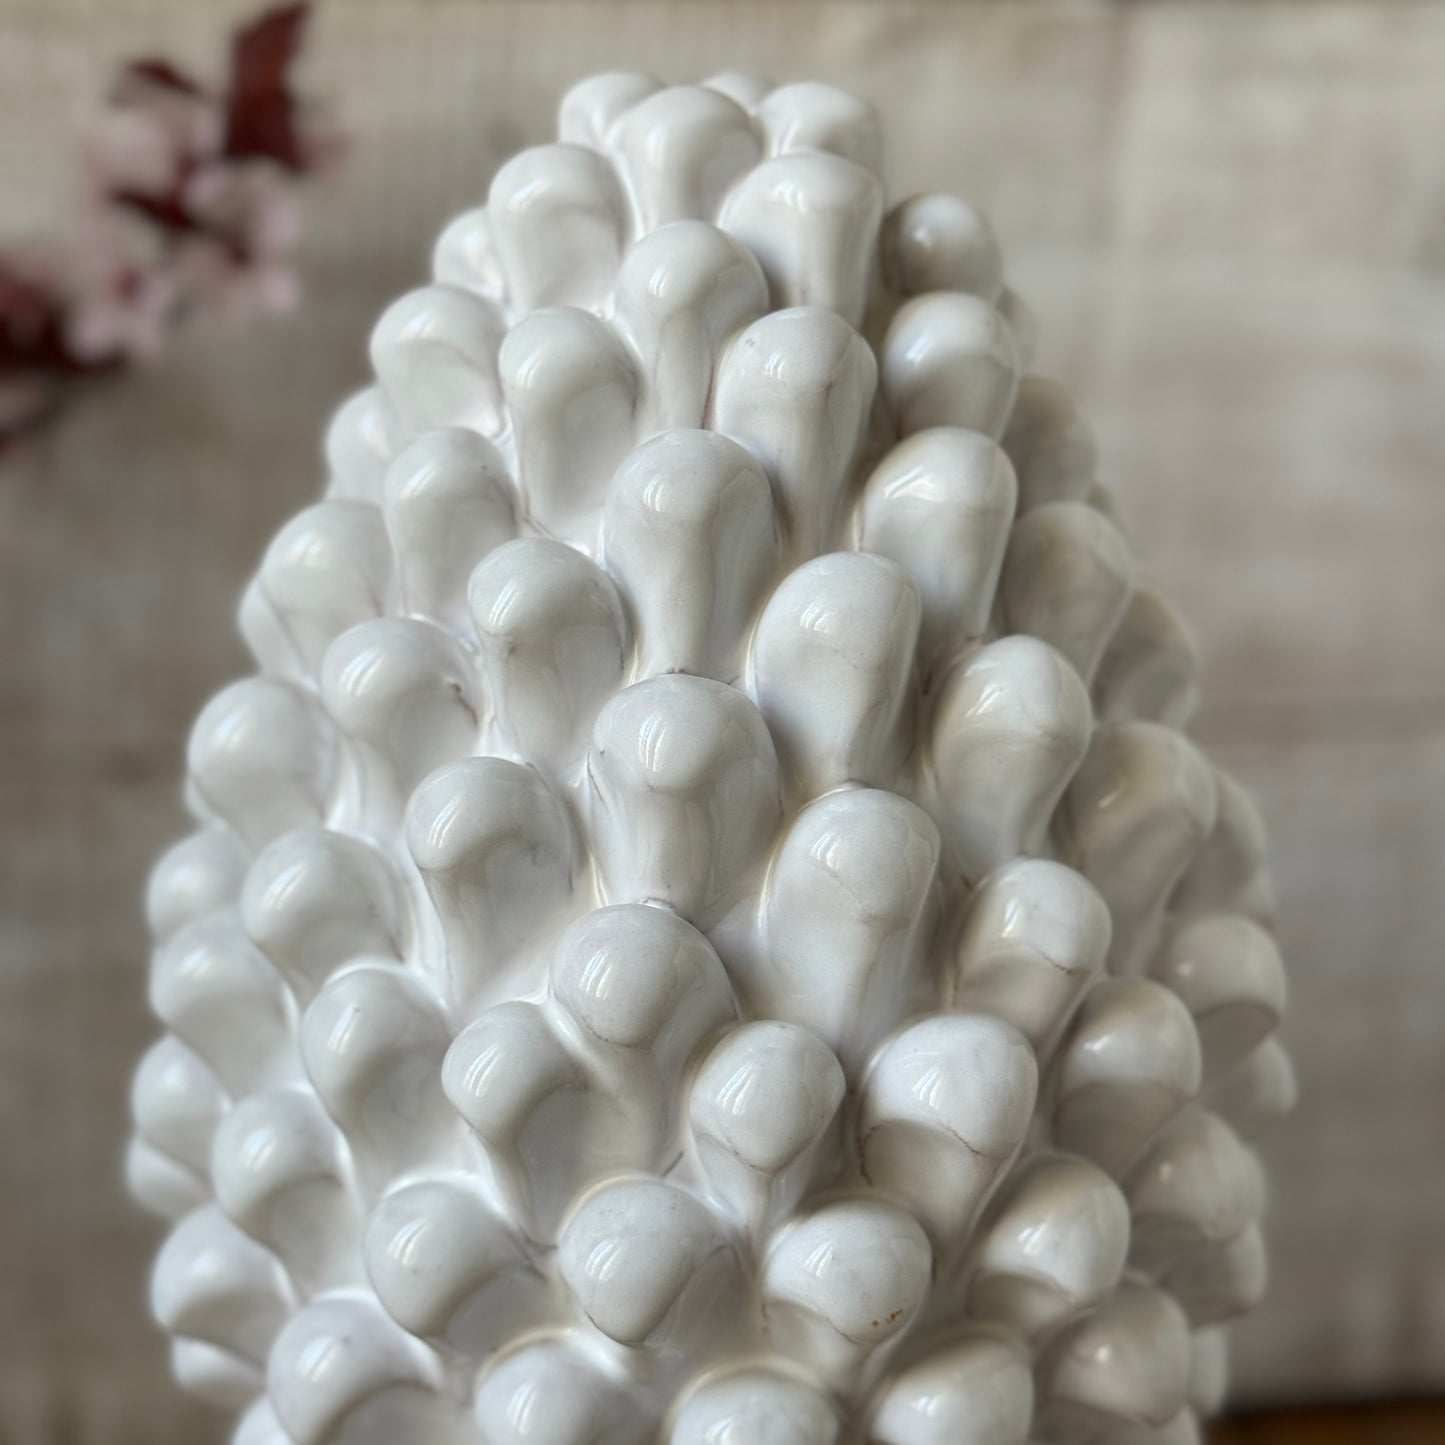 White ceramic pine cone